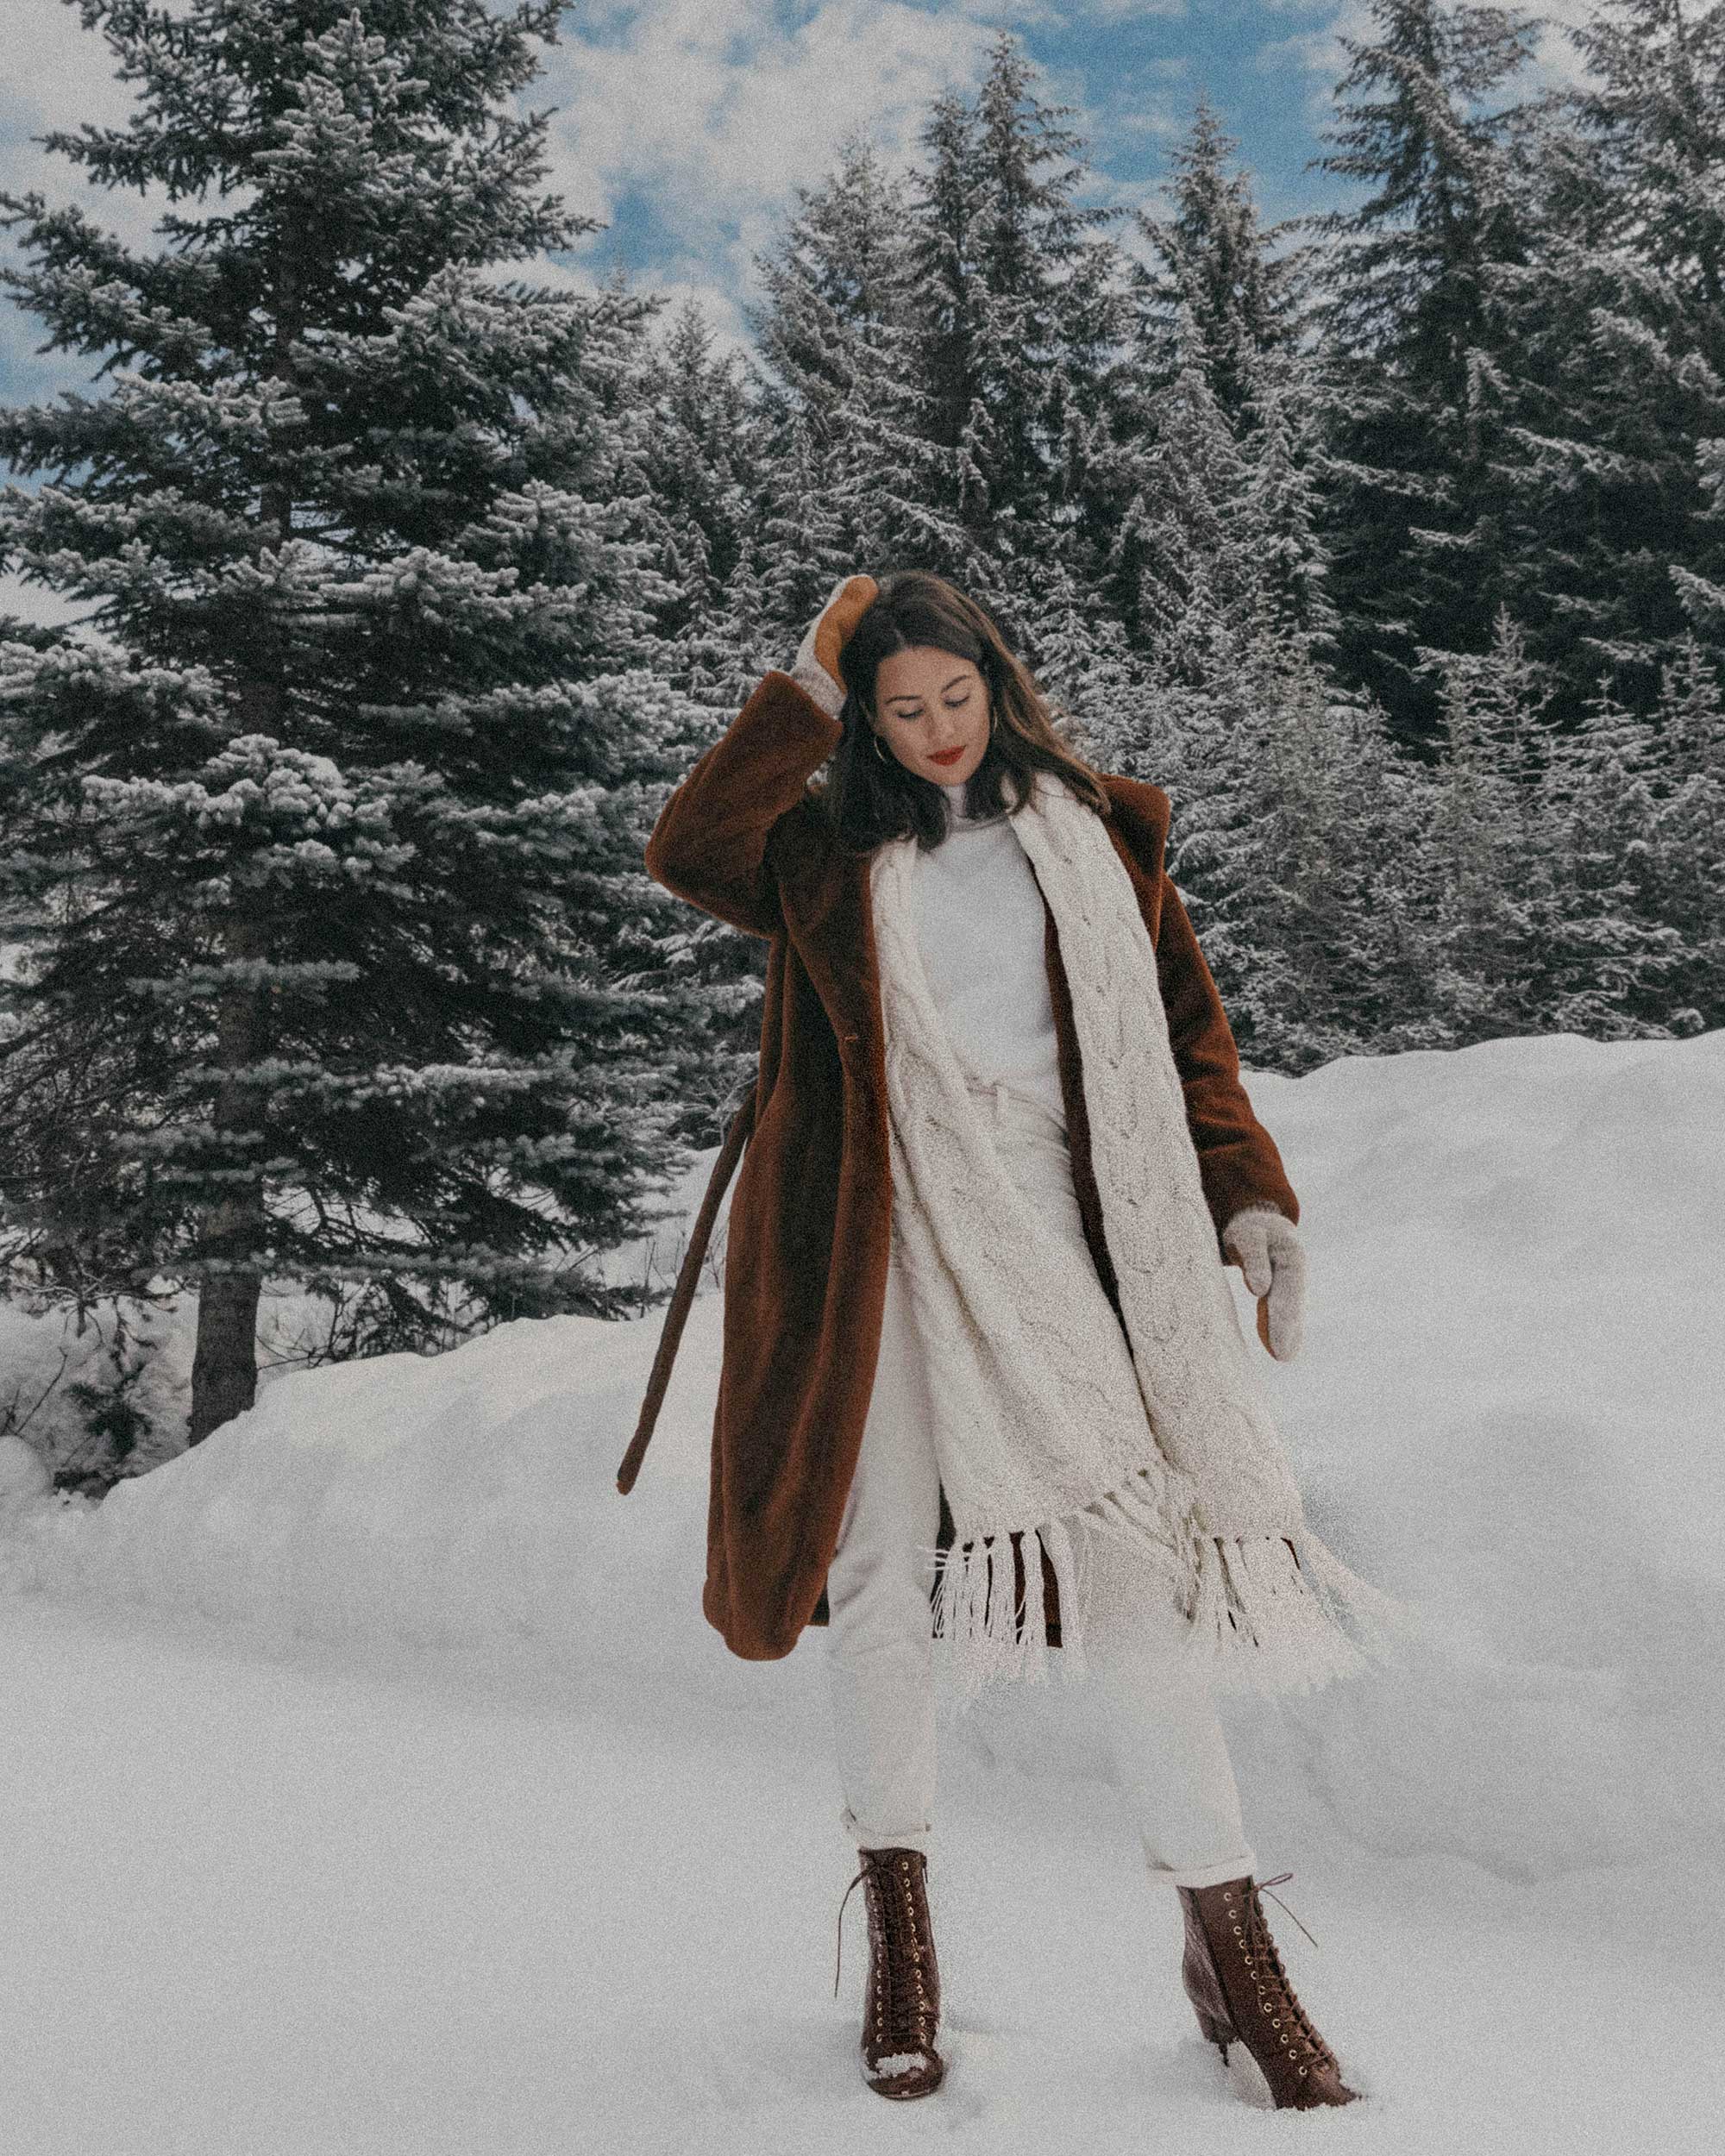 Let it Snow — Sarah Christine